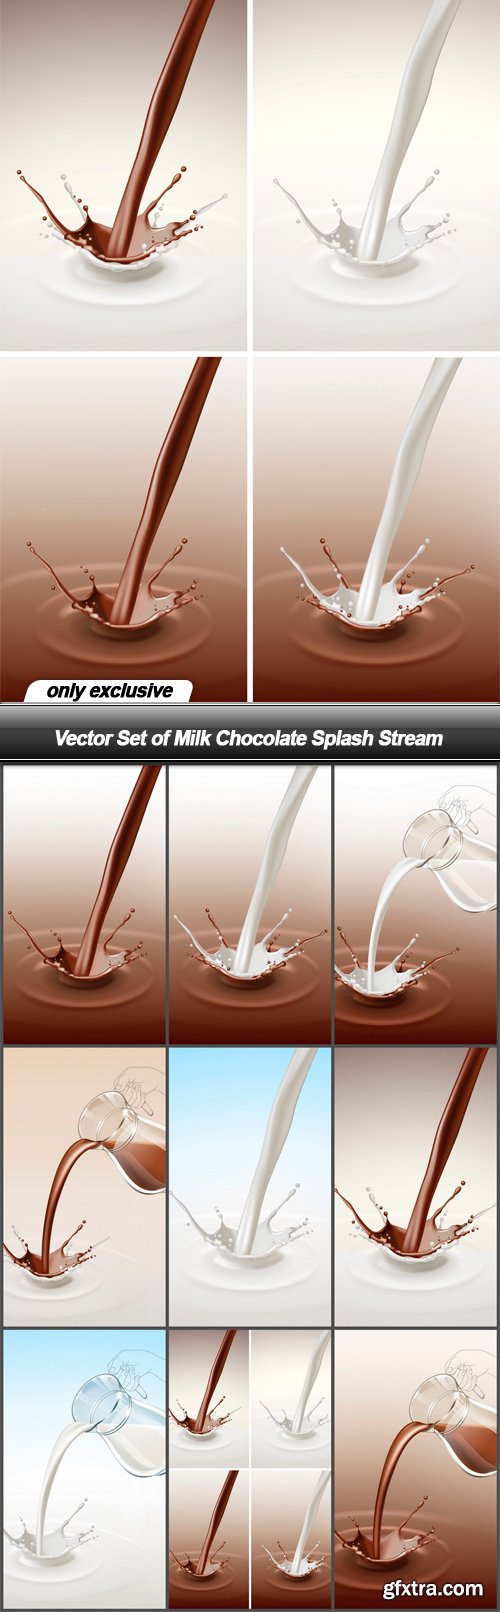 Vector Set of Milk Chocolate Splash Stream - 9 EPS